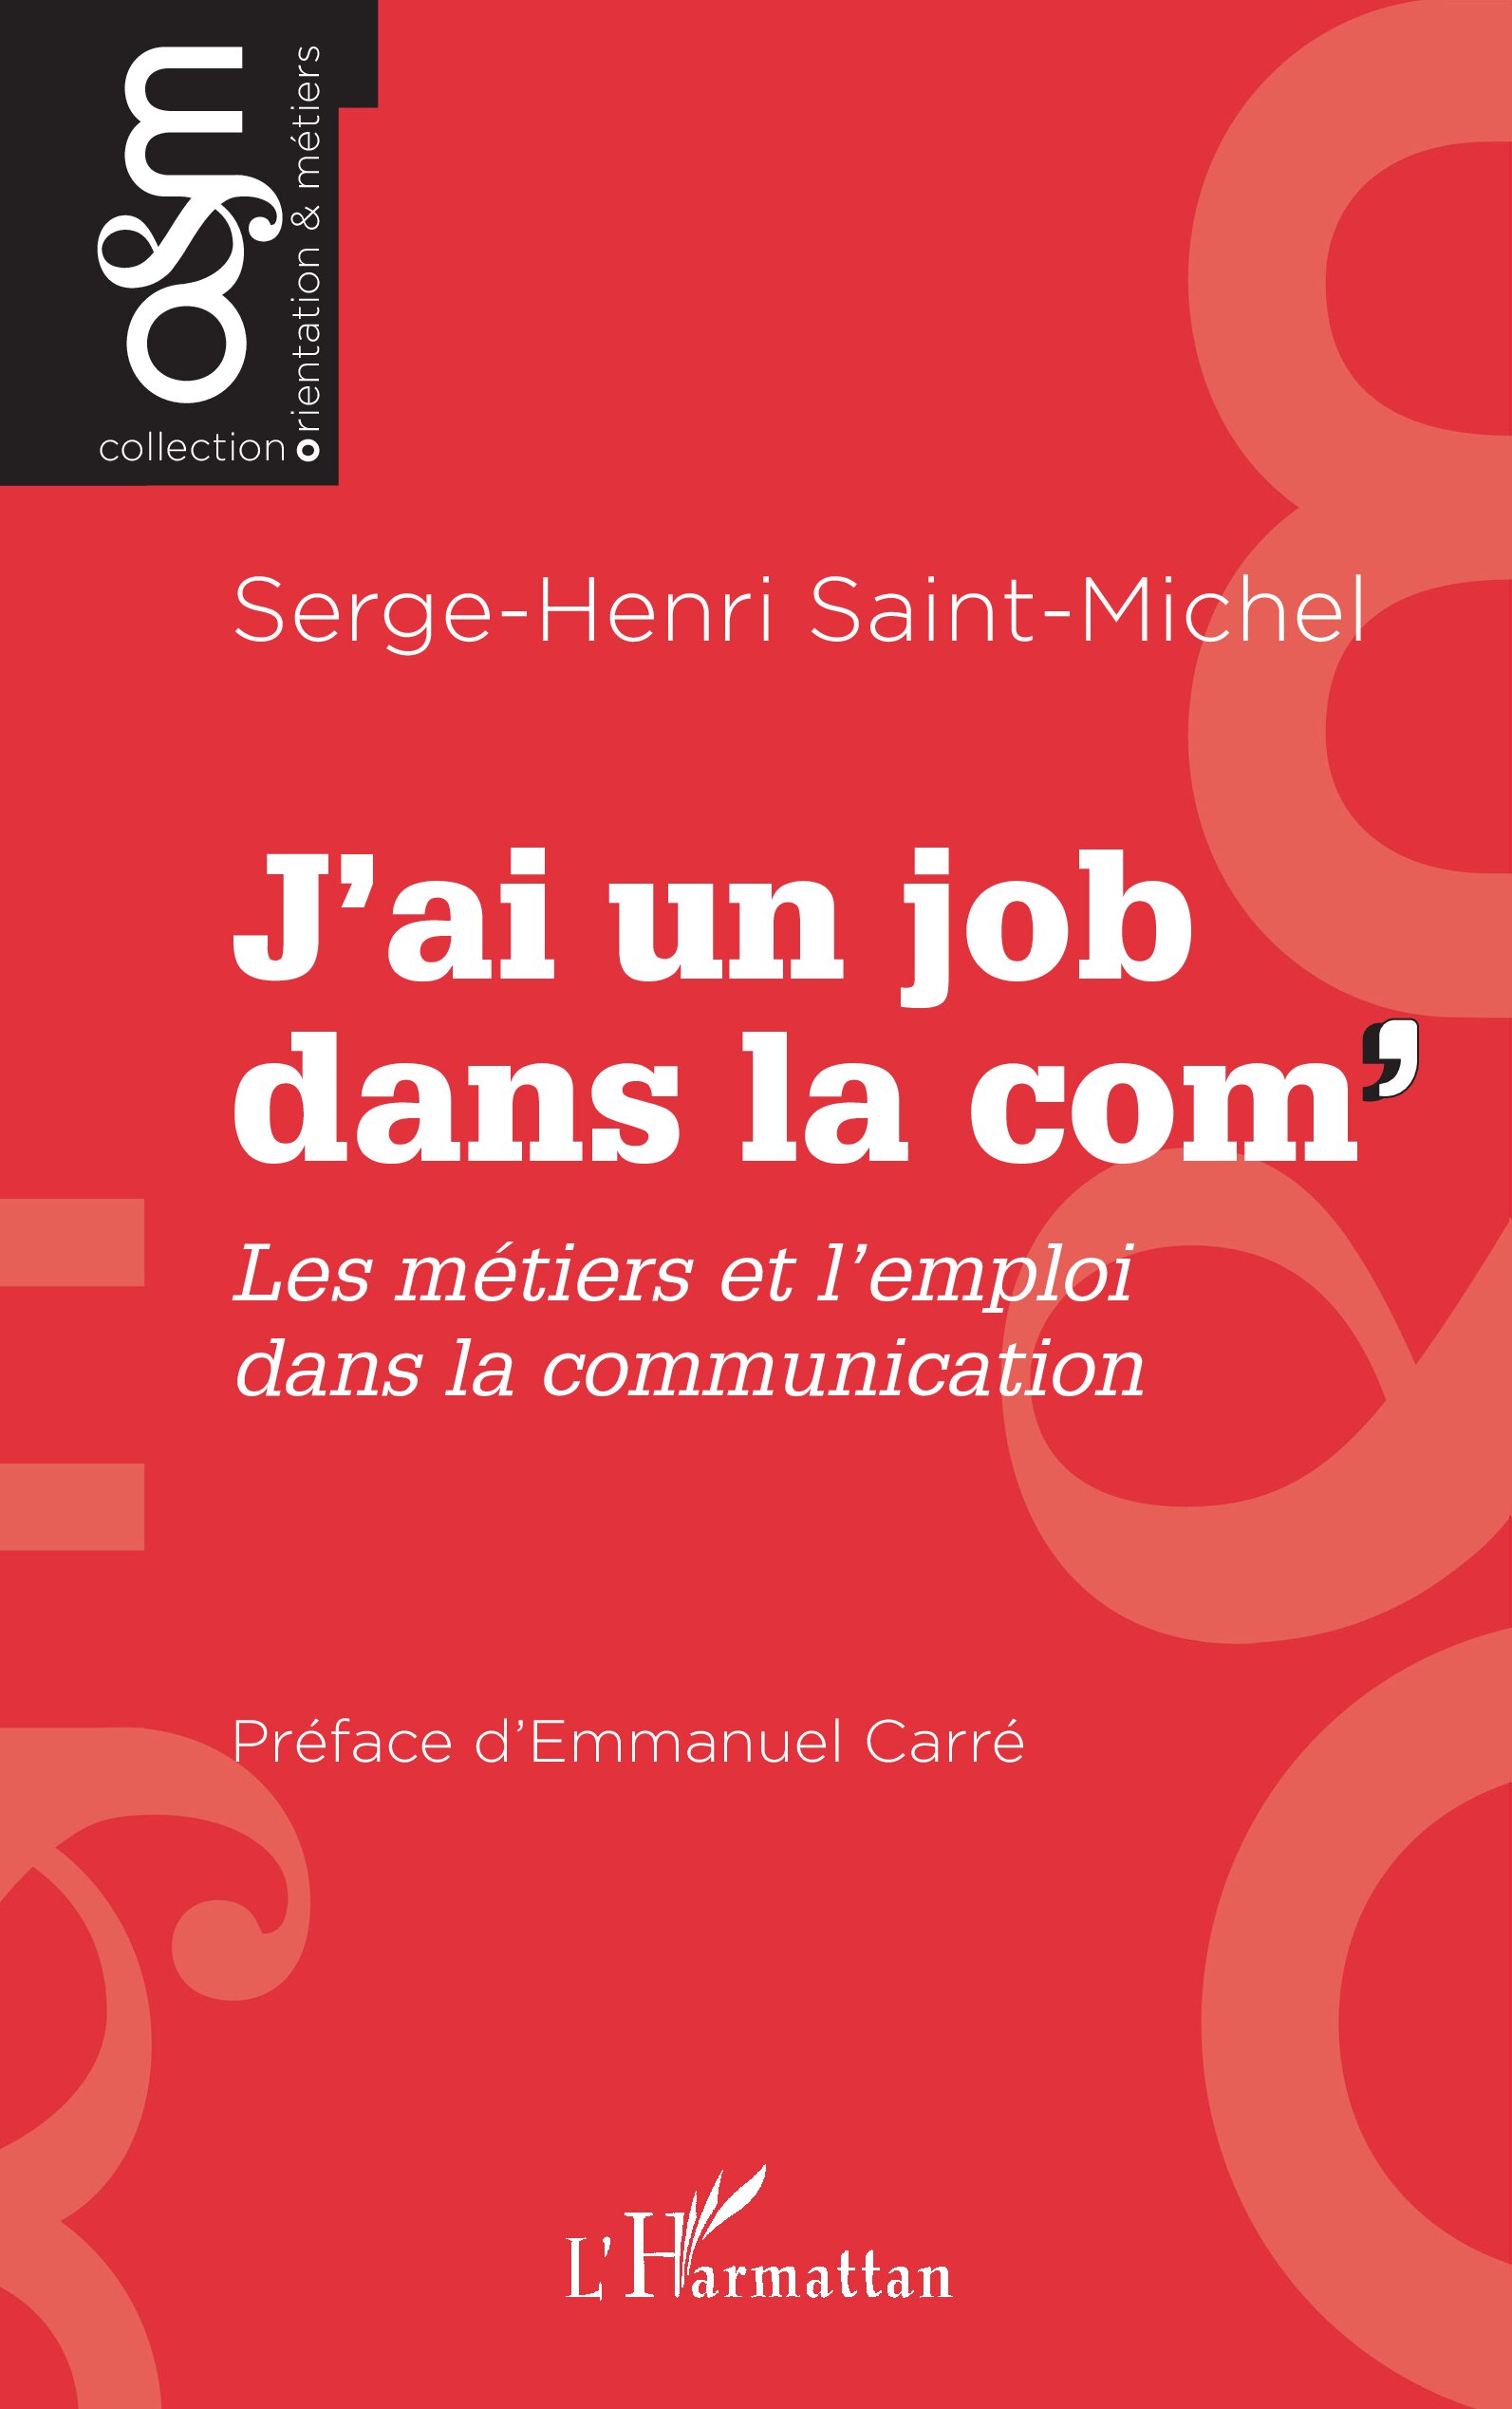 J'ai un job dans la com', par Serge-Henri Saint-Michel